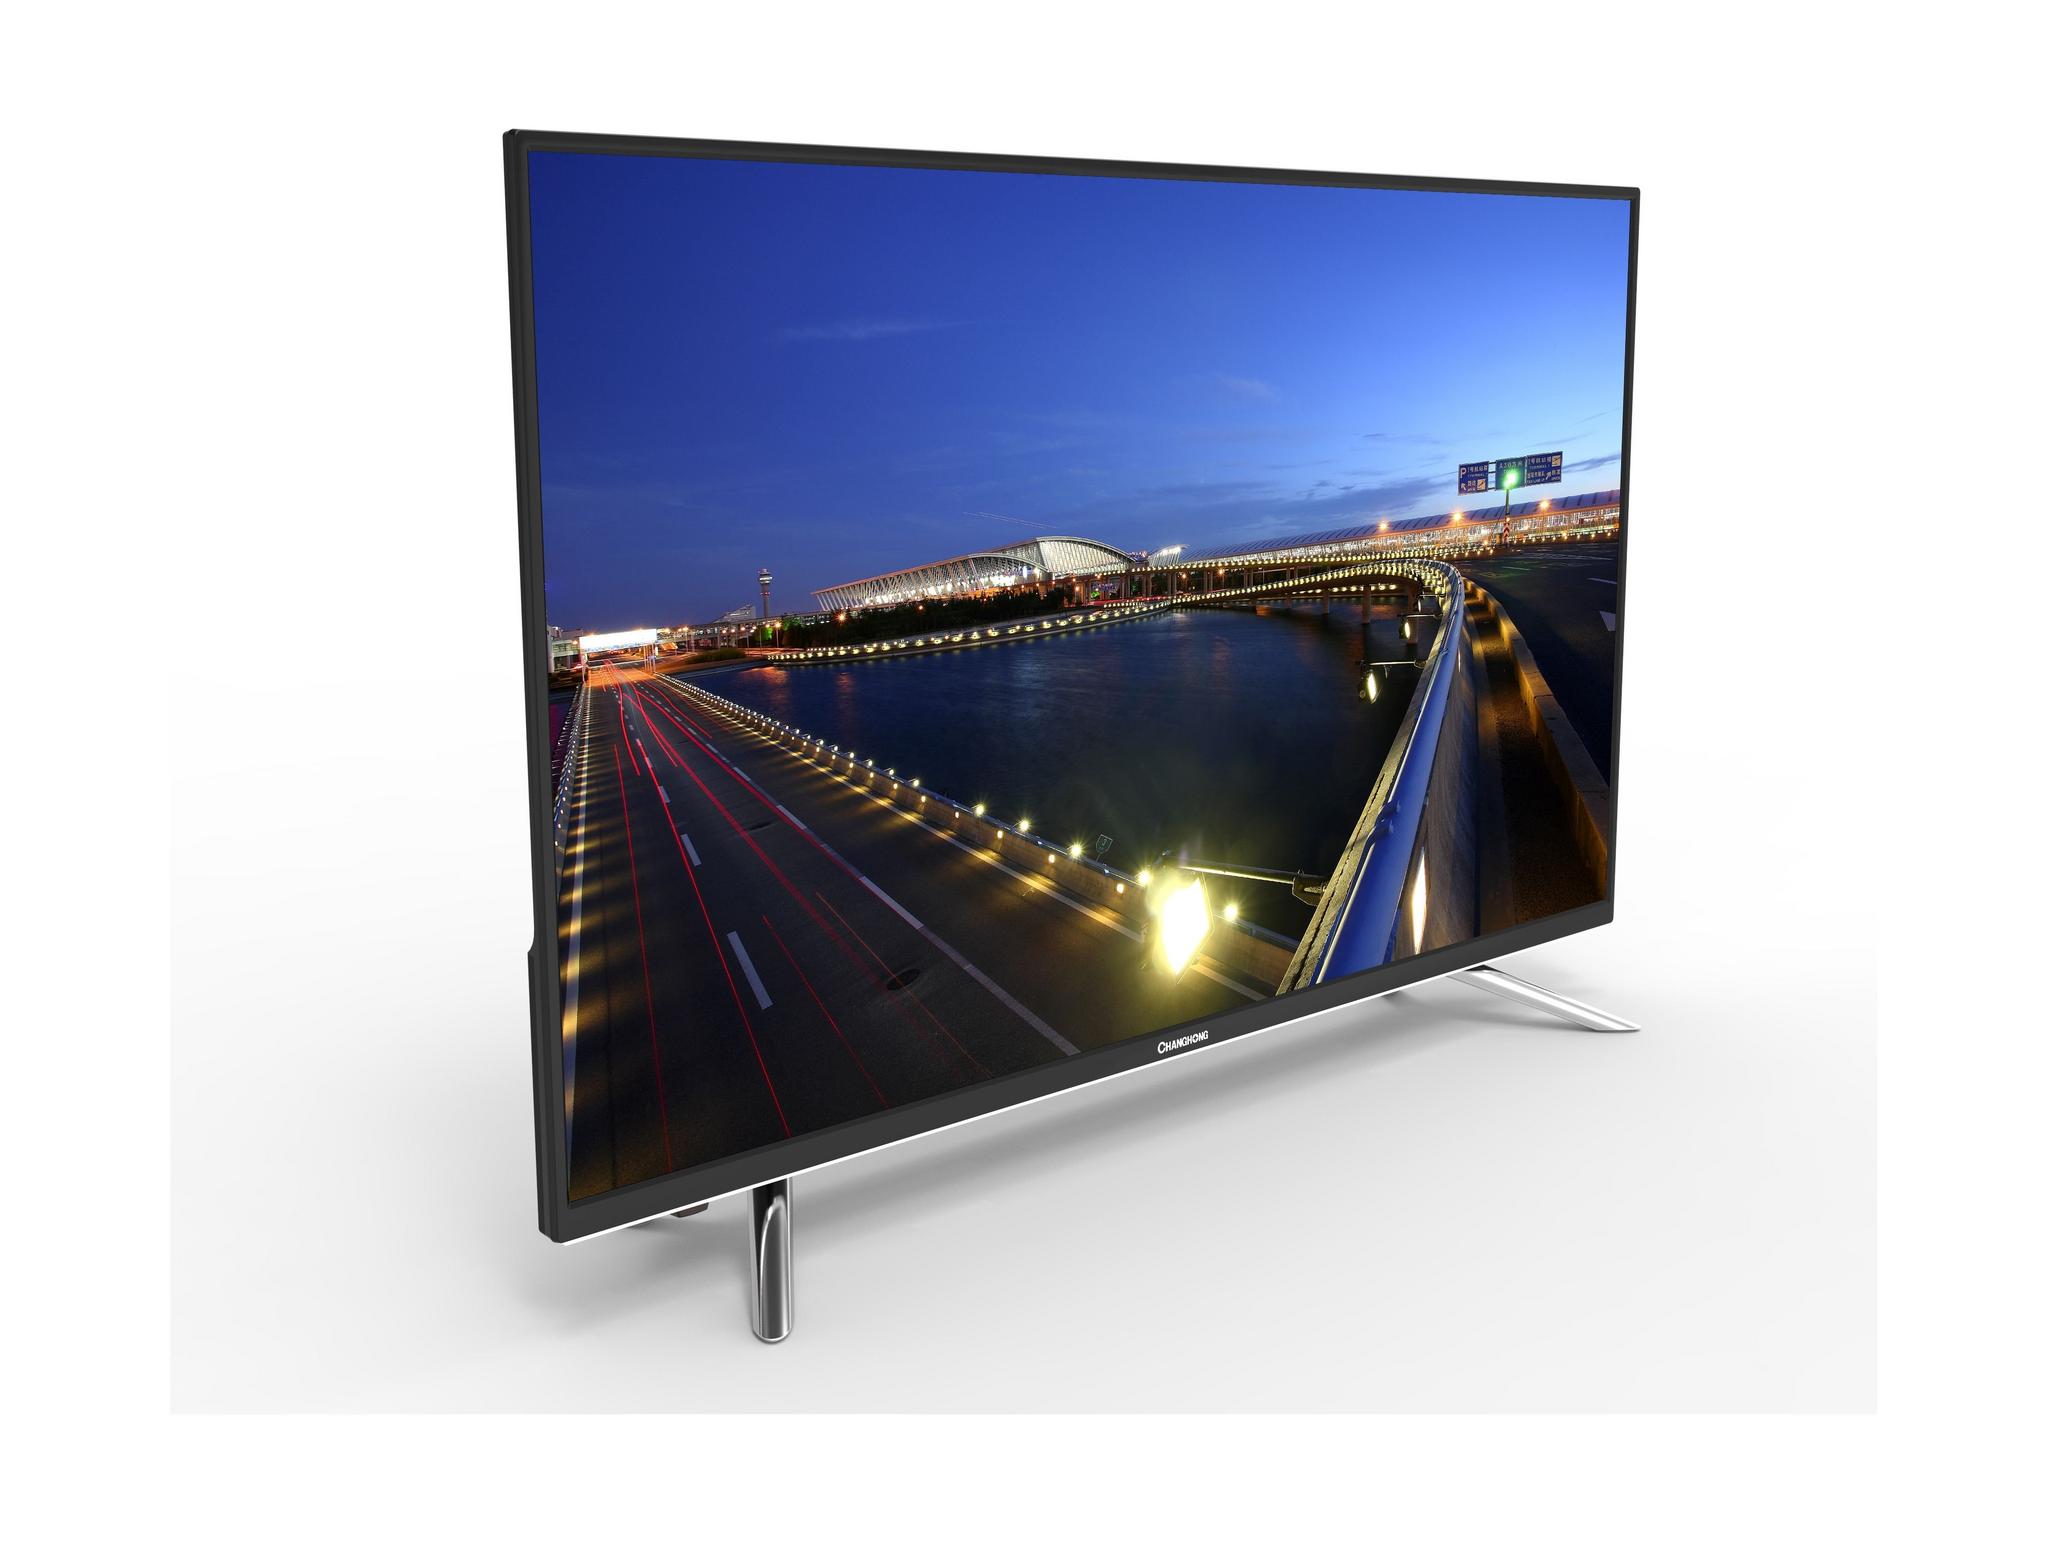 Changhong 55-inch Full HD (1080p) - LED TV LED55D2200